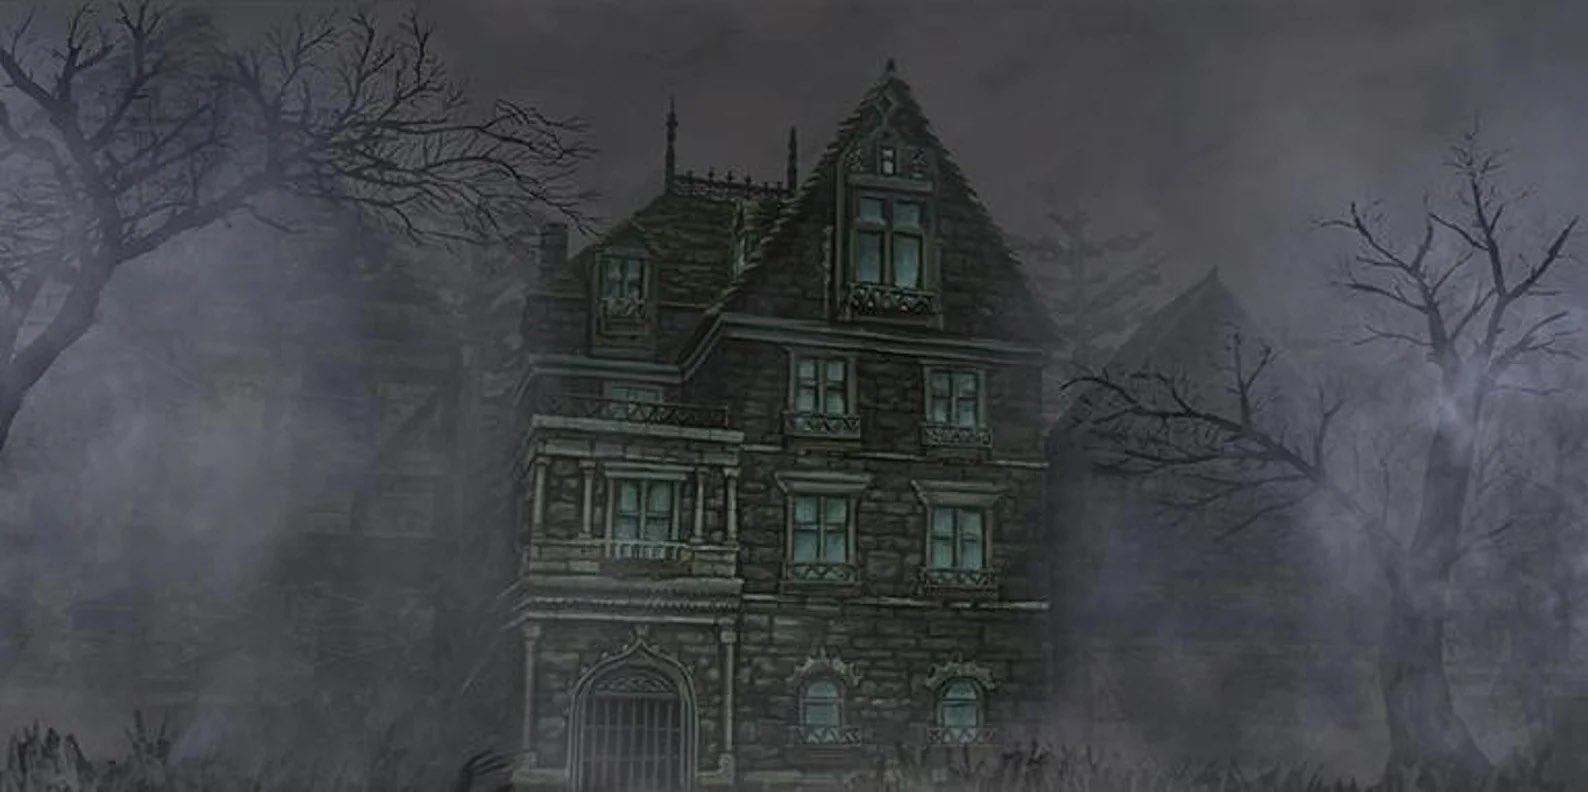 12. HOTDQ – The Death house